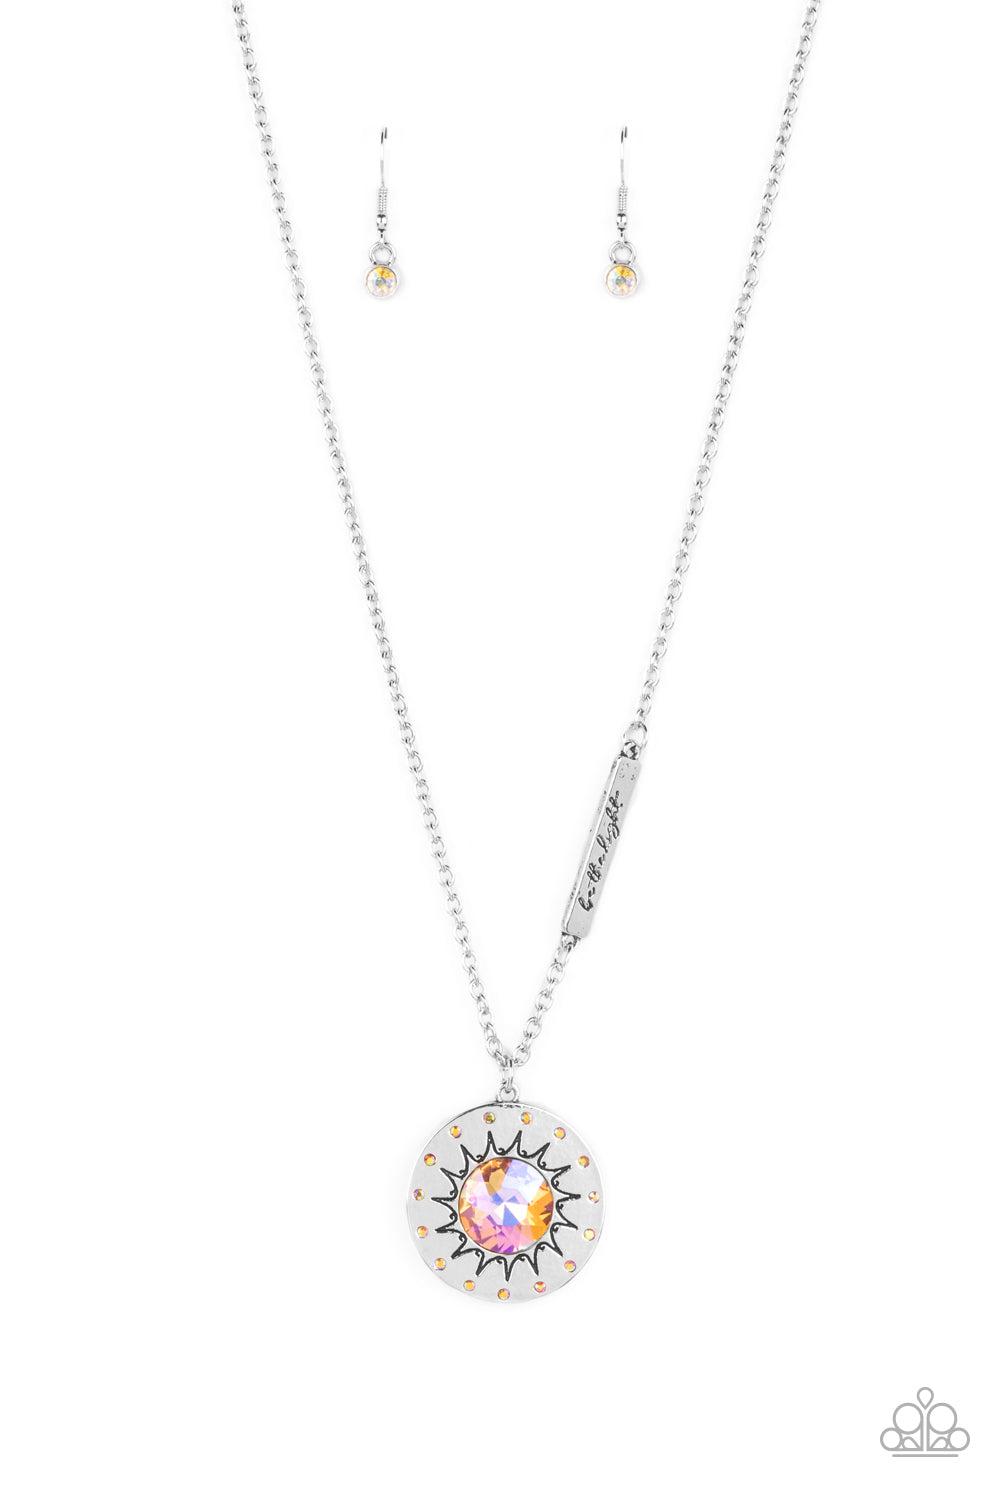 Sundial Dance Orange Inspirational Necklace - Paparazzi Accessories- lightbox - CarasShop.com - $5 Jewelry by Cara Jewels